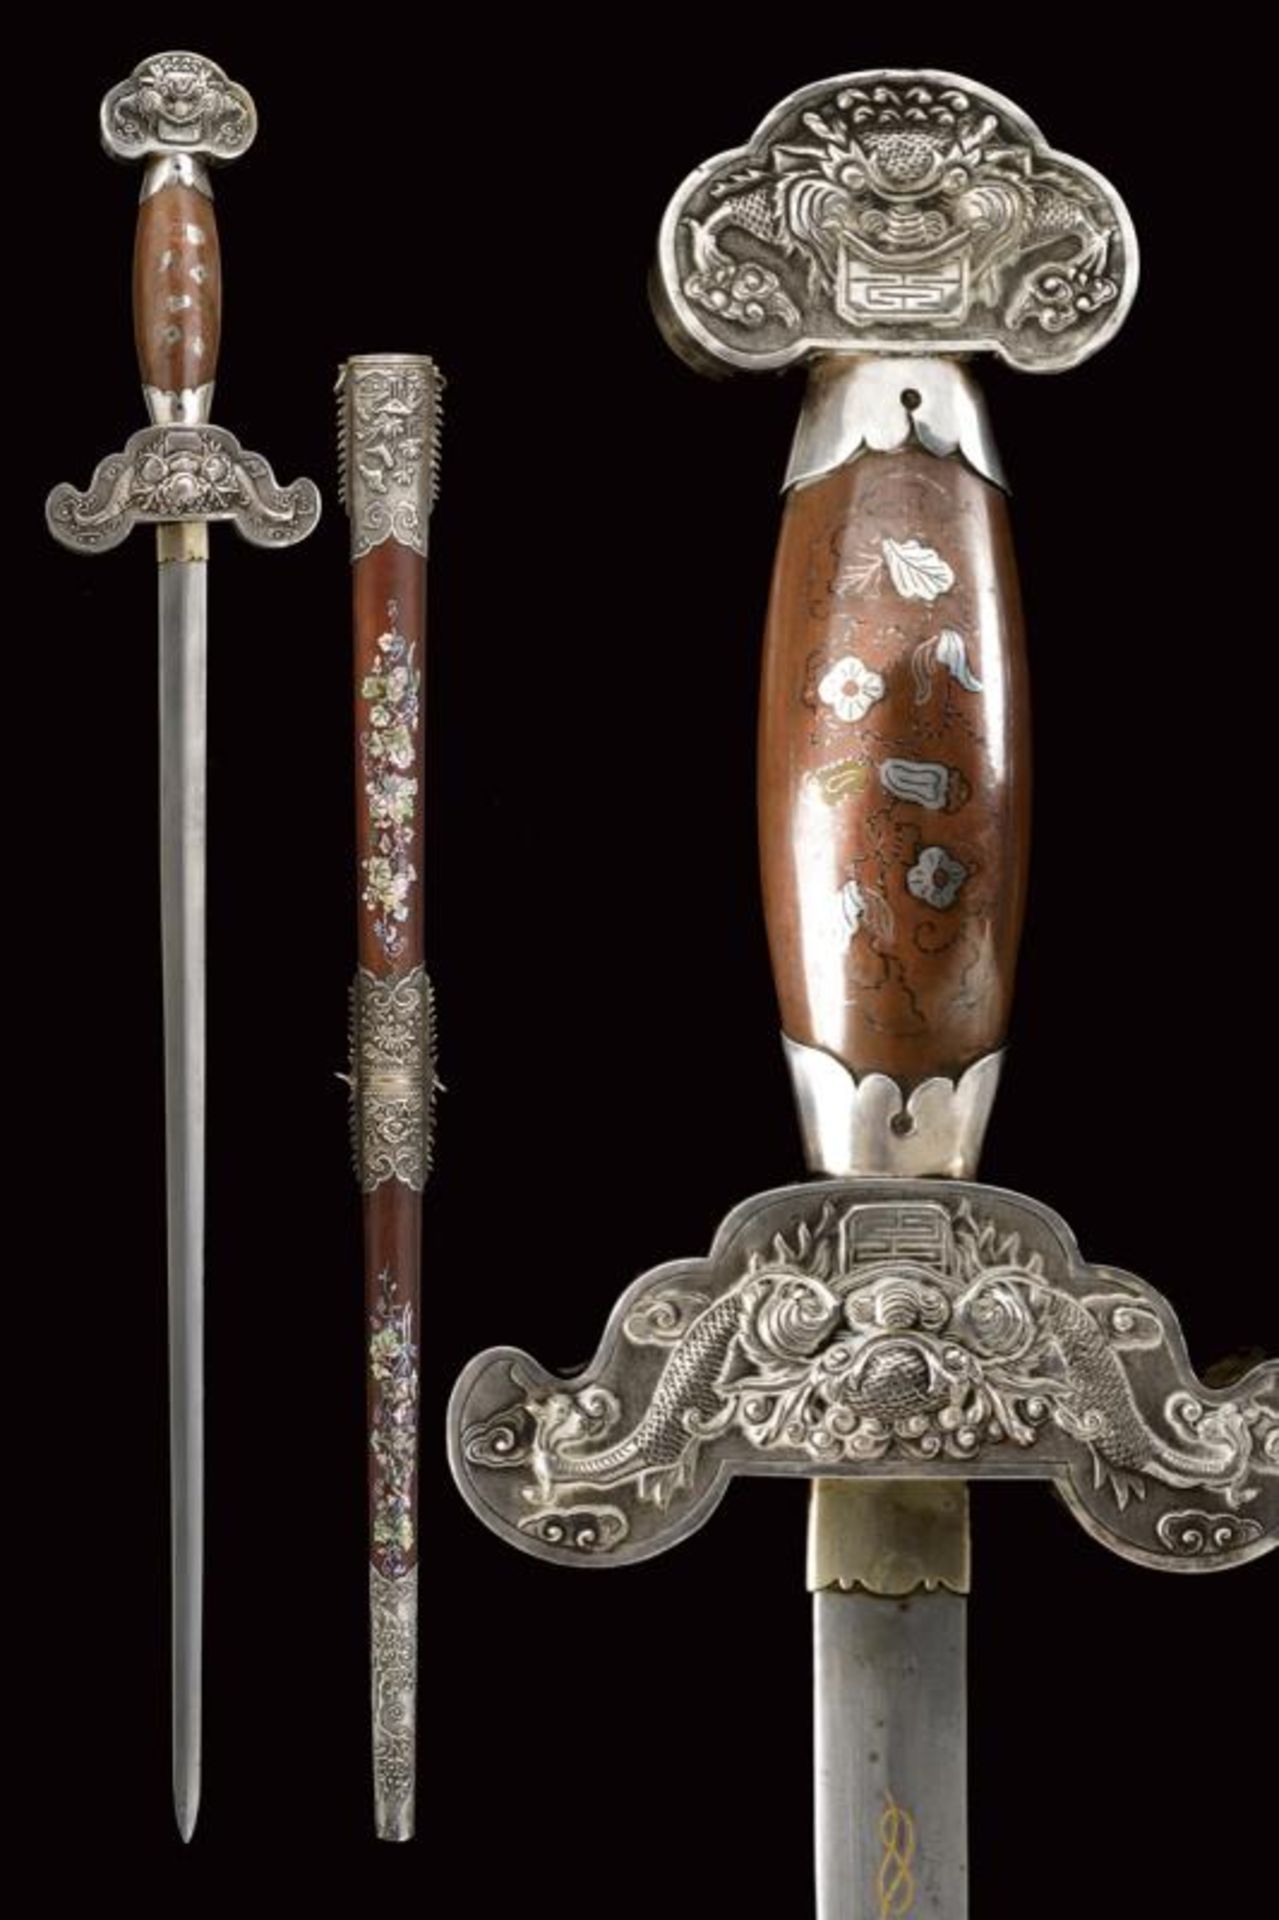 A beautiful silver mounted sword